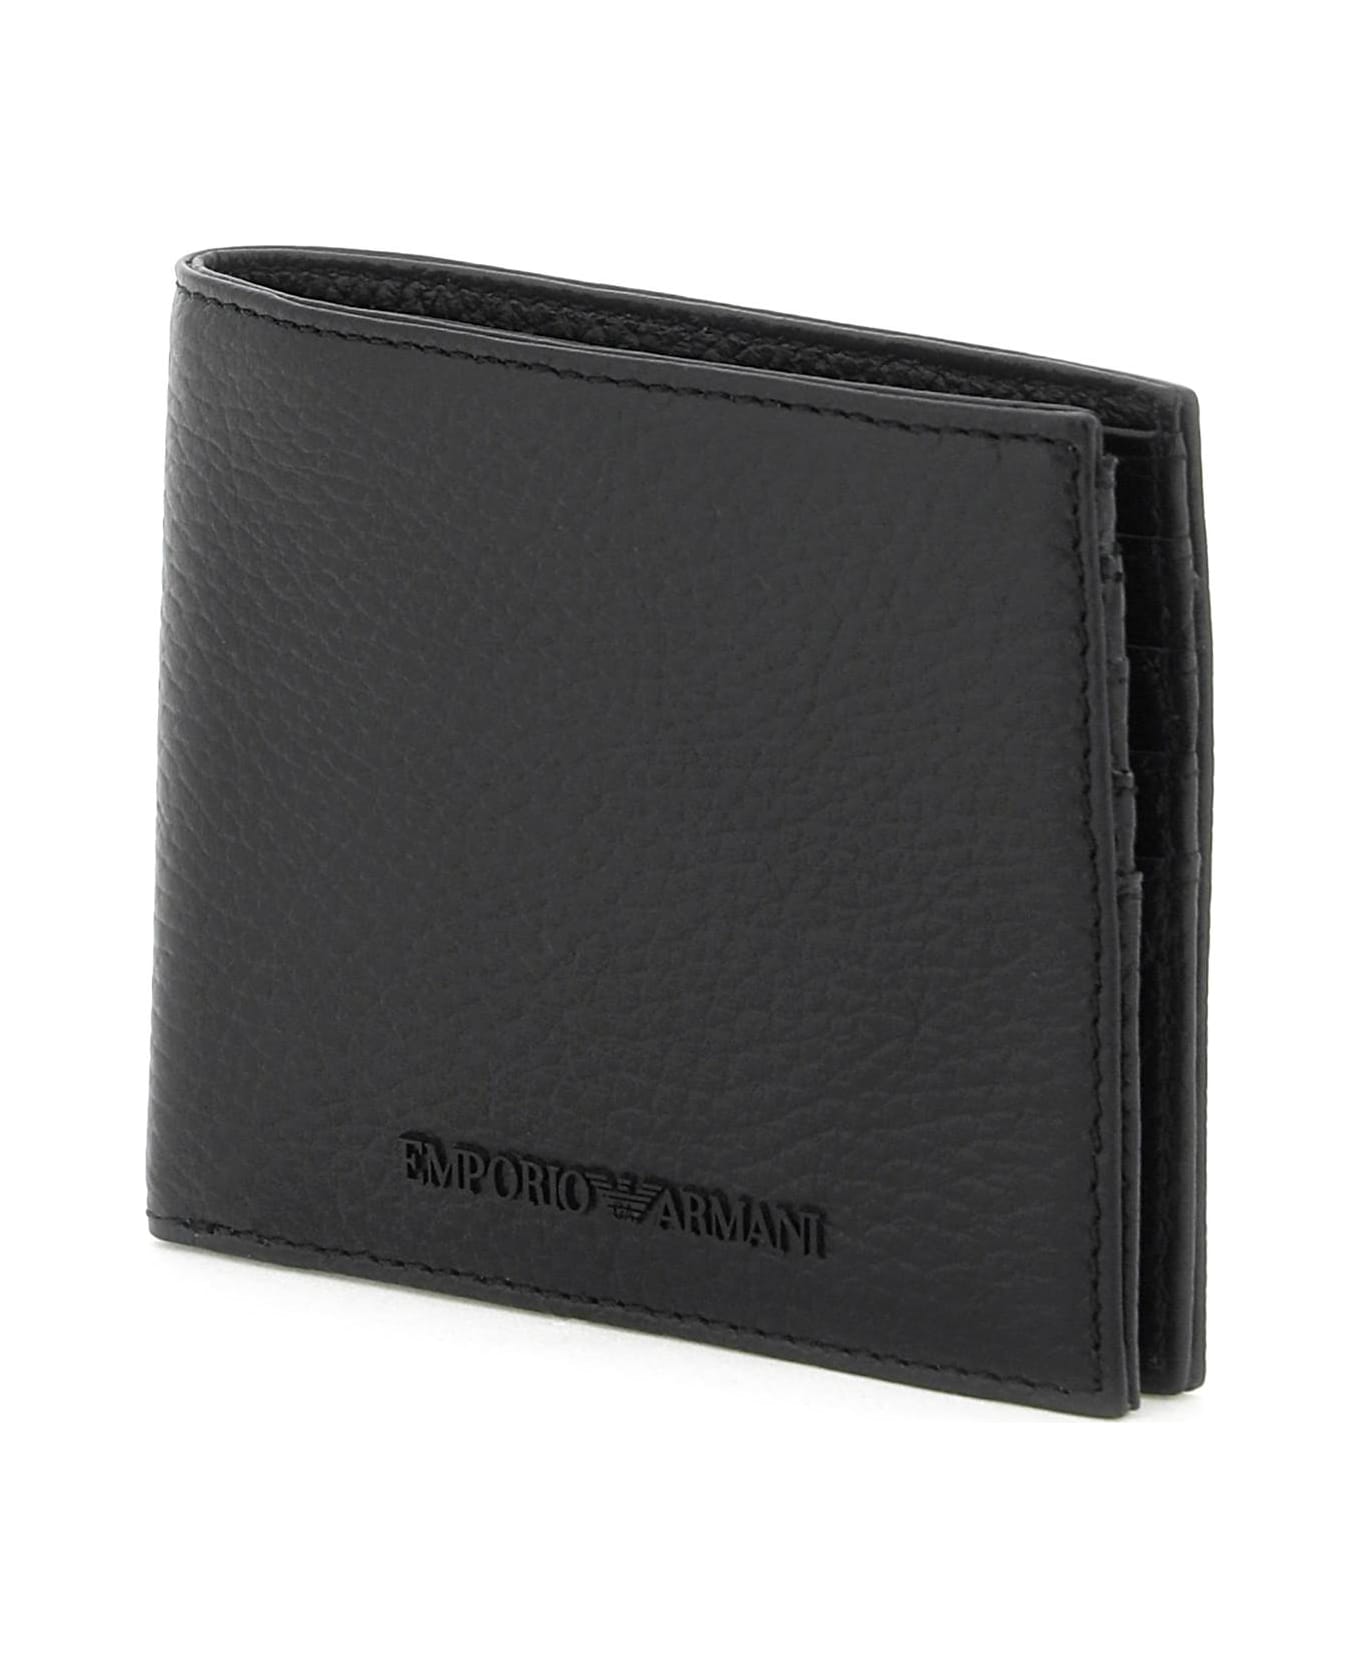 Emporio Armani Grained Leather Wallet - Black